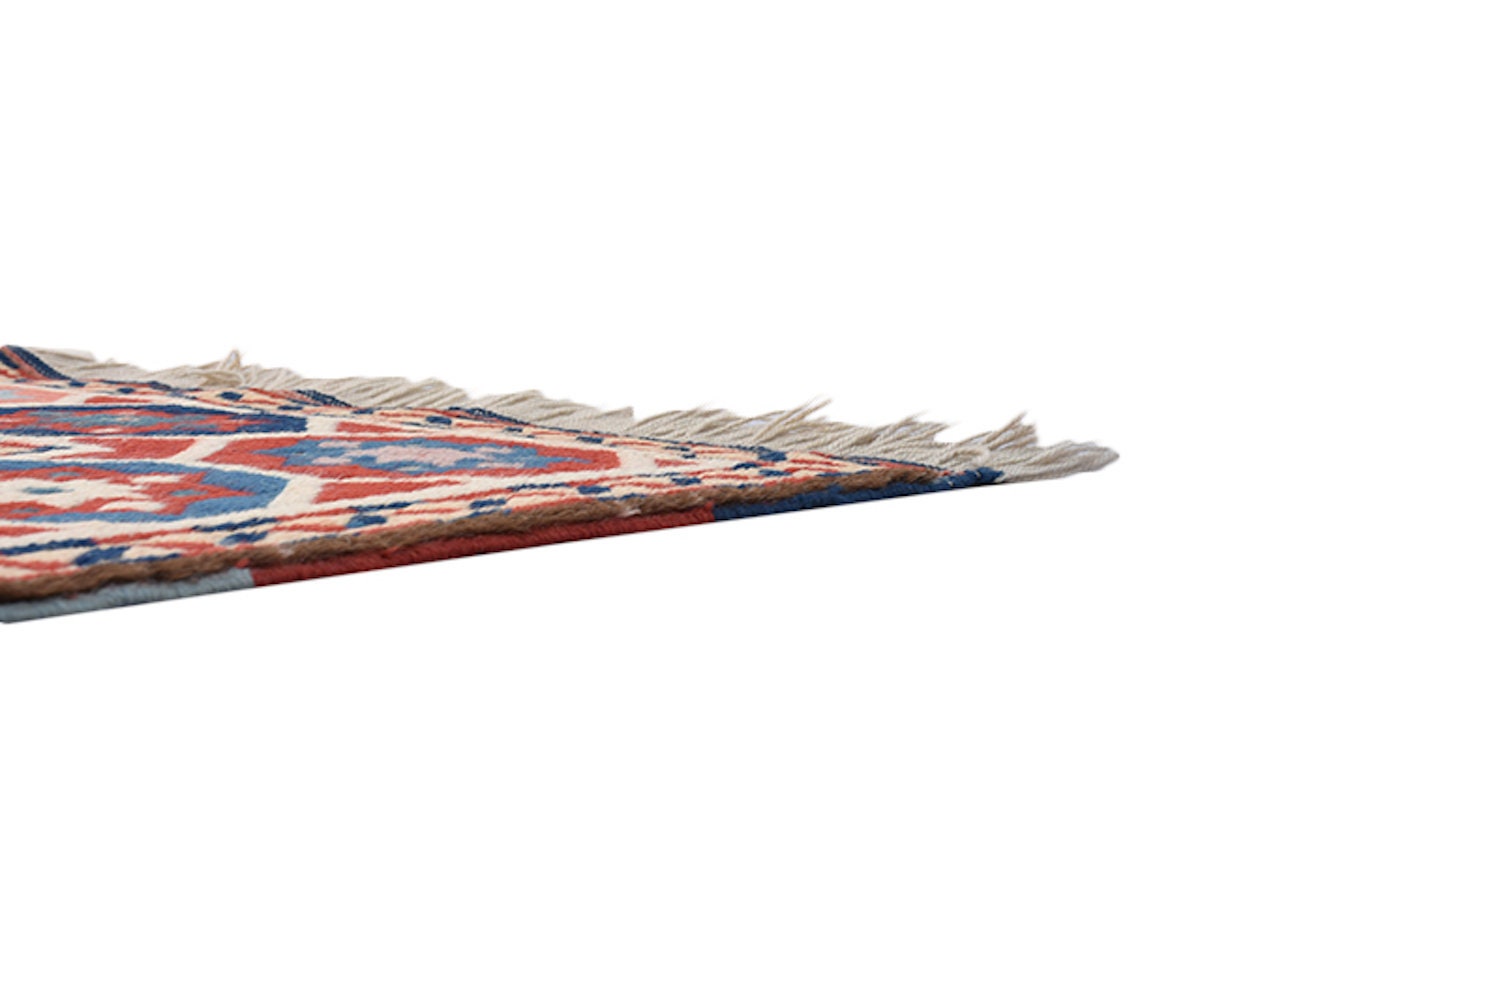 Blue Red Rug | Geometric Tribal Pattern | Nautical Style | 4 x 6 ft | Wool Kazak Rug | Handwoven Antique Rug